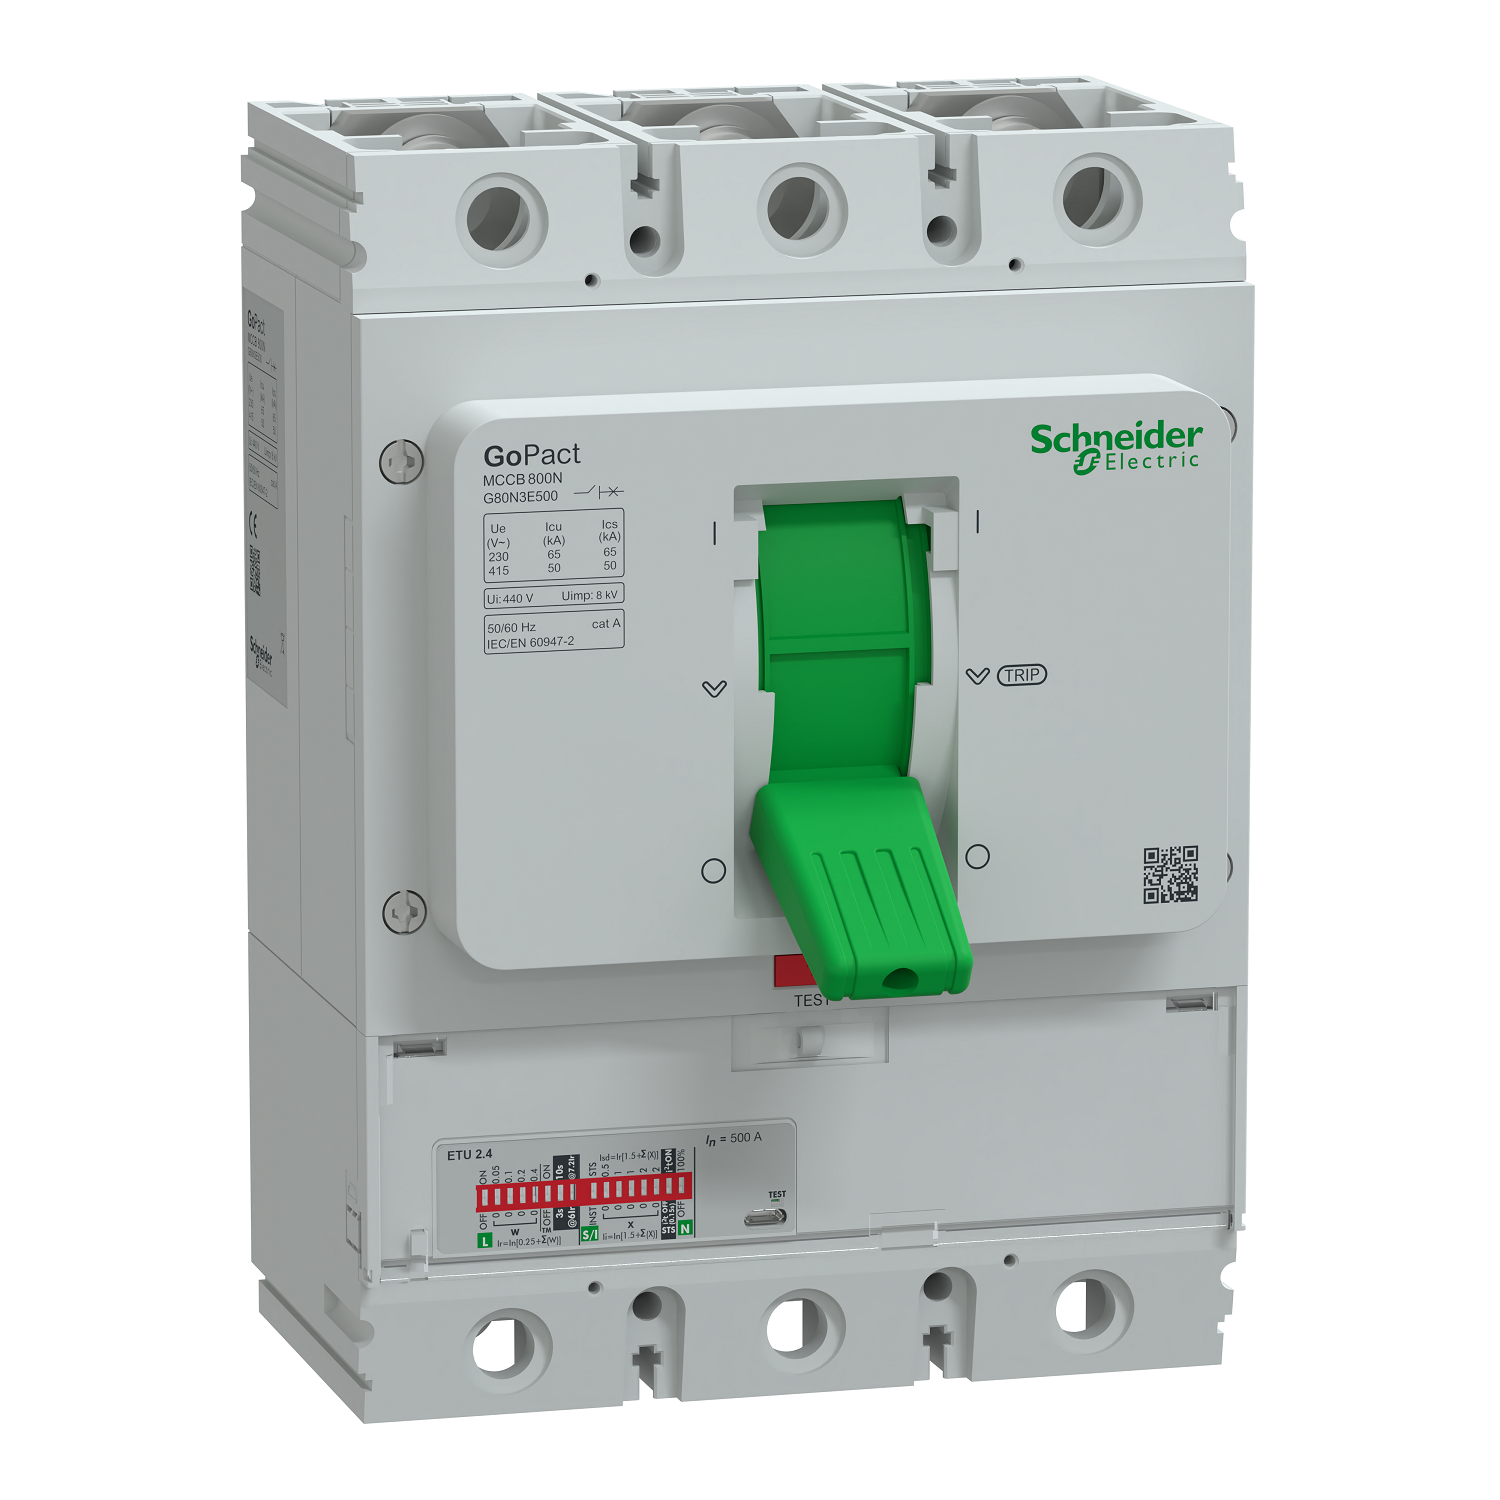 Circuit breaker, GoPact MCCB 800, 3 poles, 50kA at 415VAC, 500A rating, ETU trip unit, adjustable thermal protection